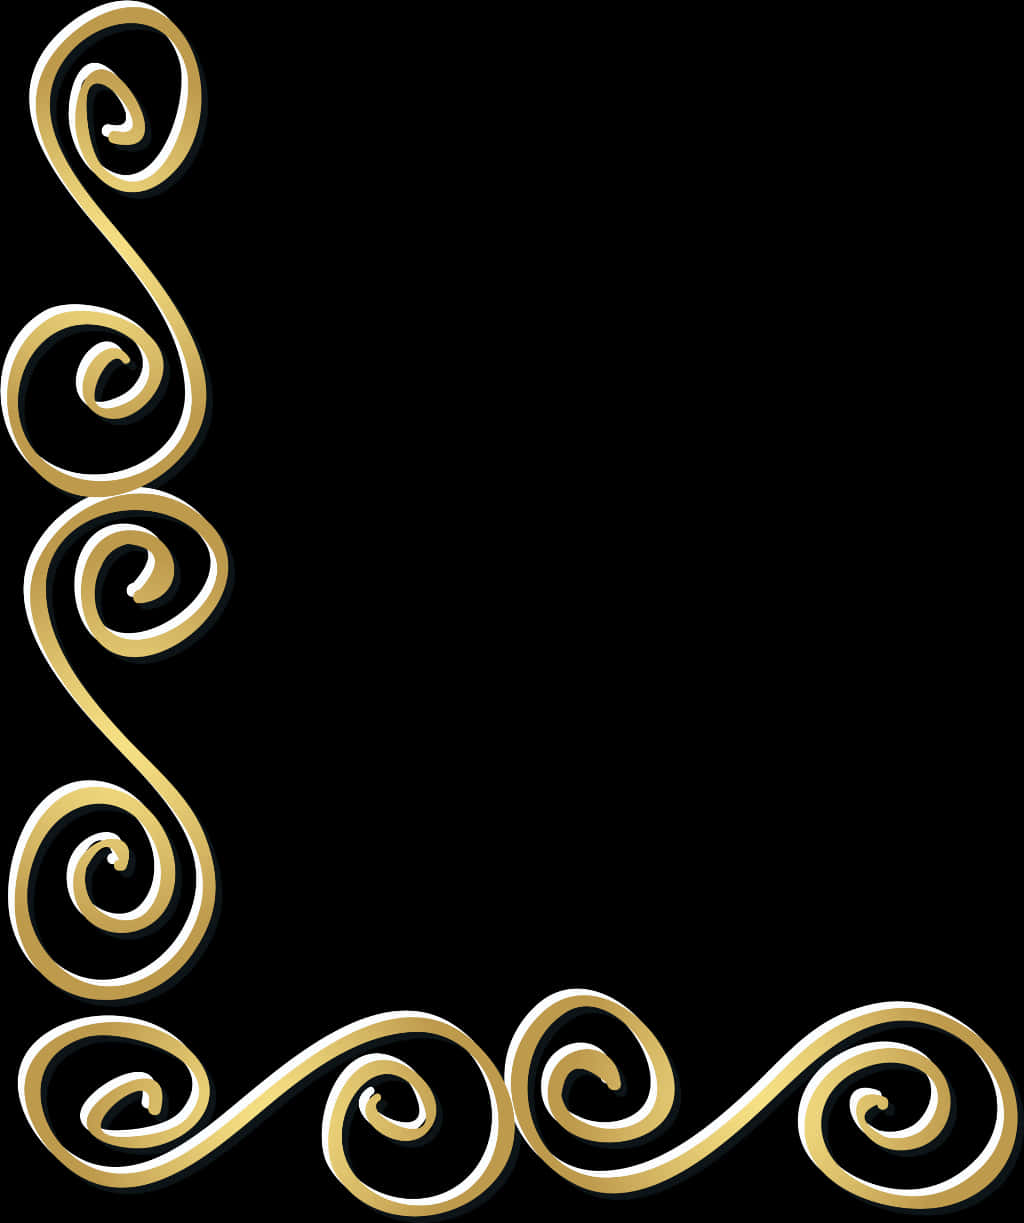 Elegant Gold Swirls Border Design PNG